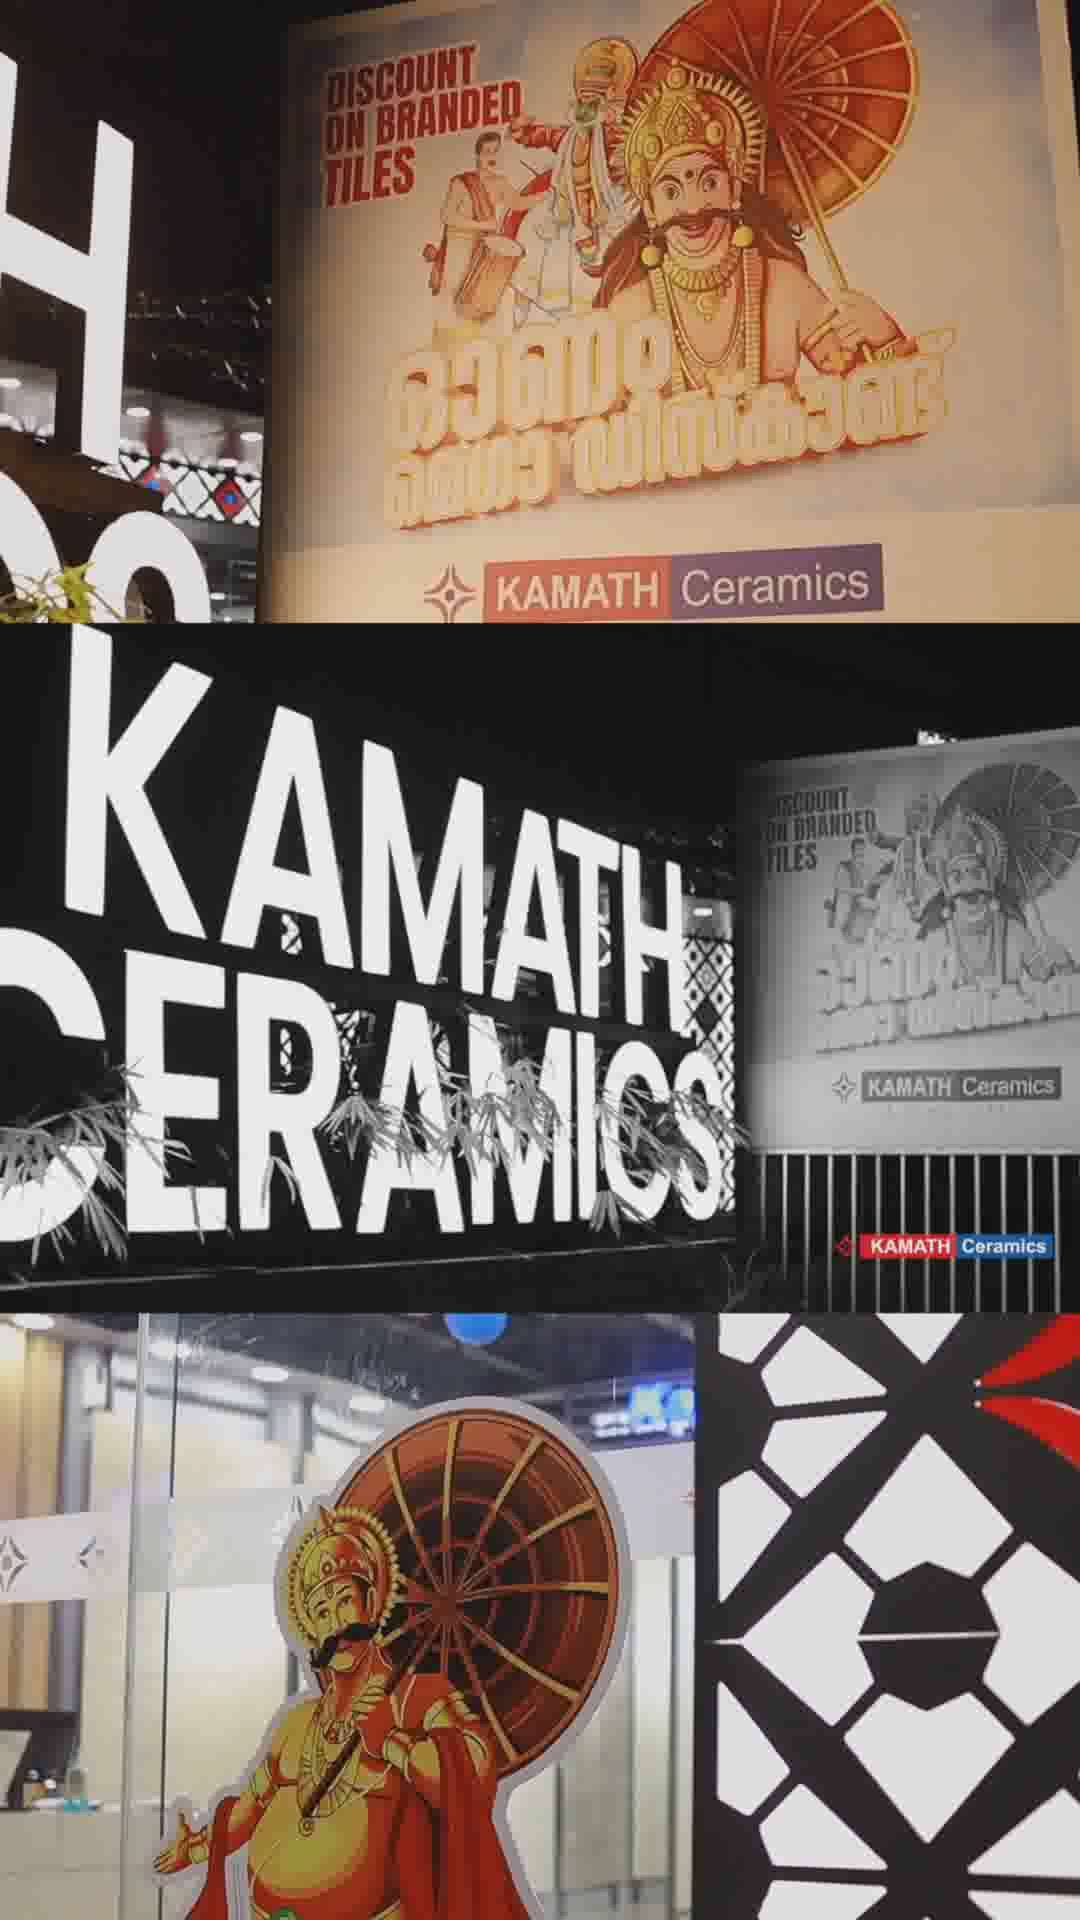 Oman mega discount upto 50% off on Branded Tiles and sanitary. visit #kamathceramics #Kannur #offerprice #kannurian #kannurconstruction #kannurinterior #kannur_logam